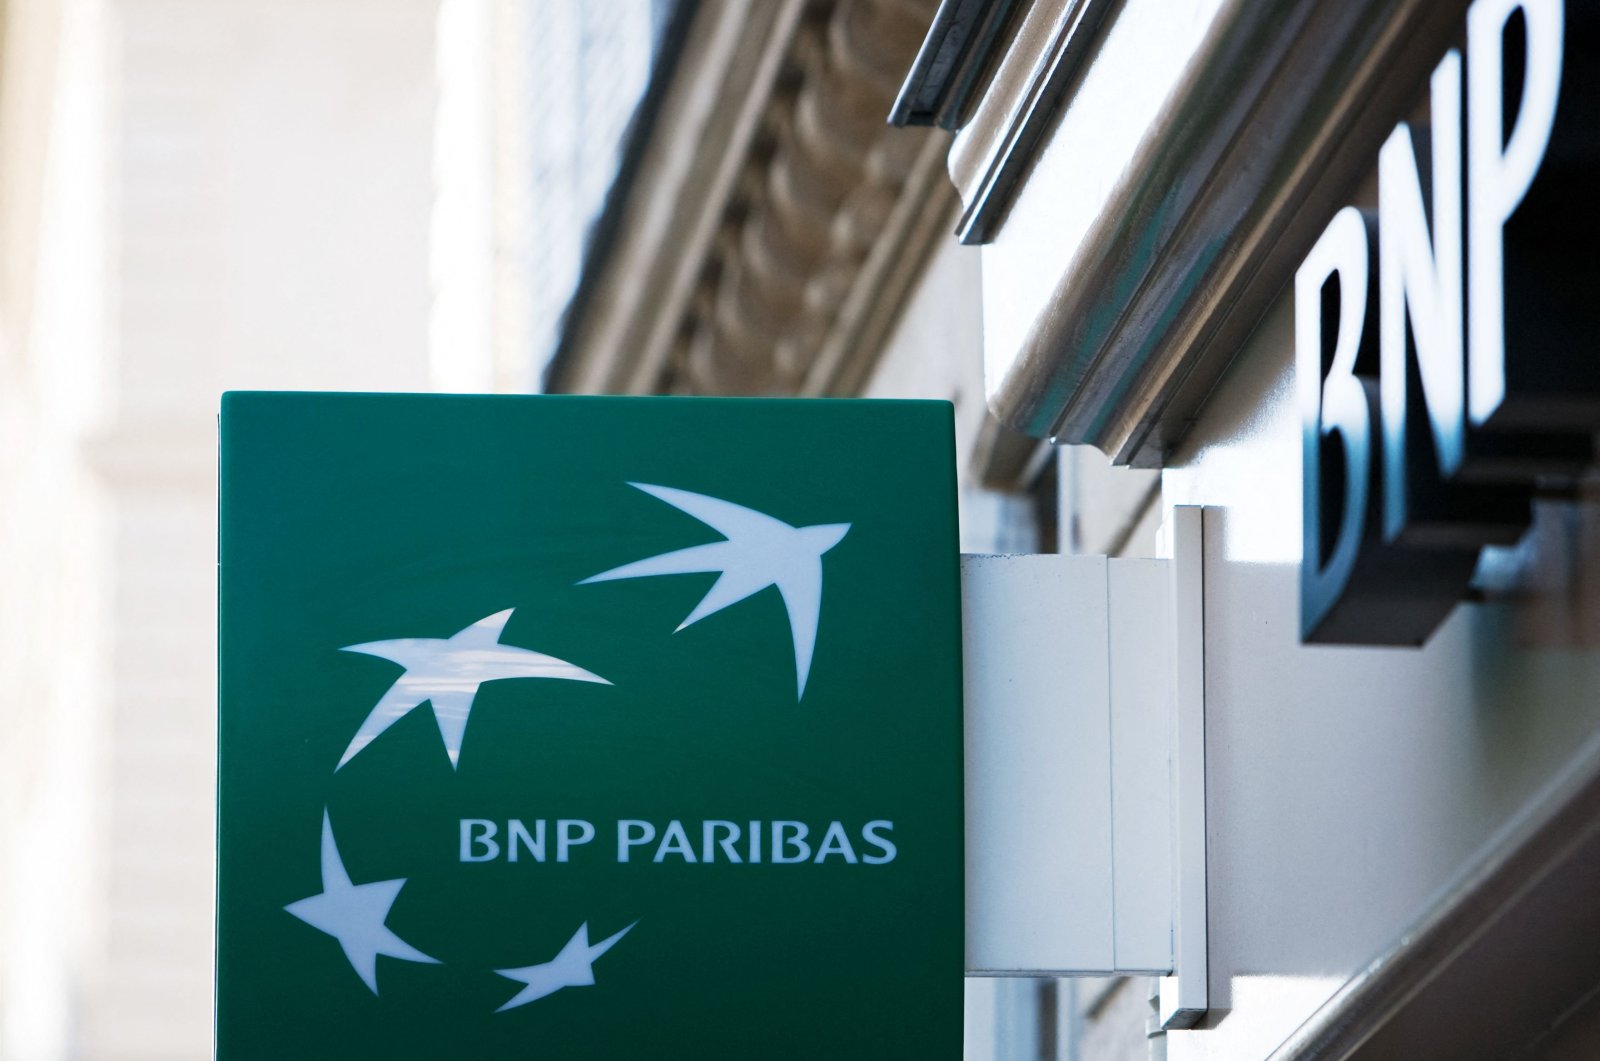 Raksasa pinjaman Prancis BNP Paribas menjual unit AS seharga $ 16,3 miliar